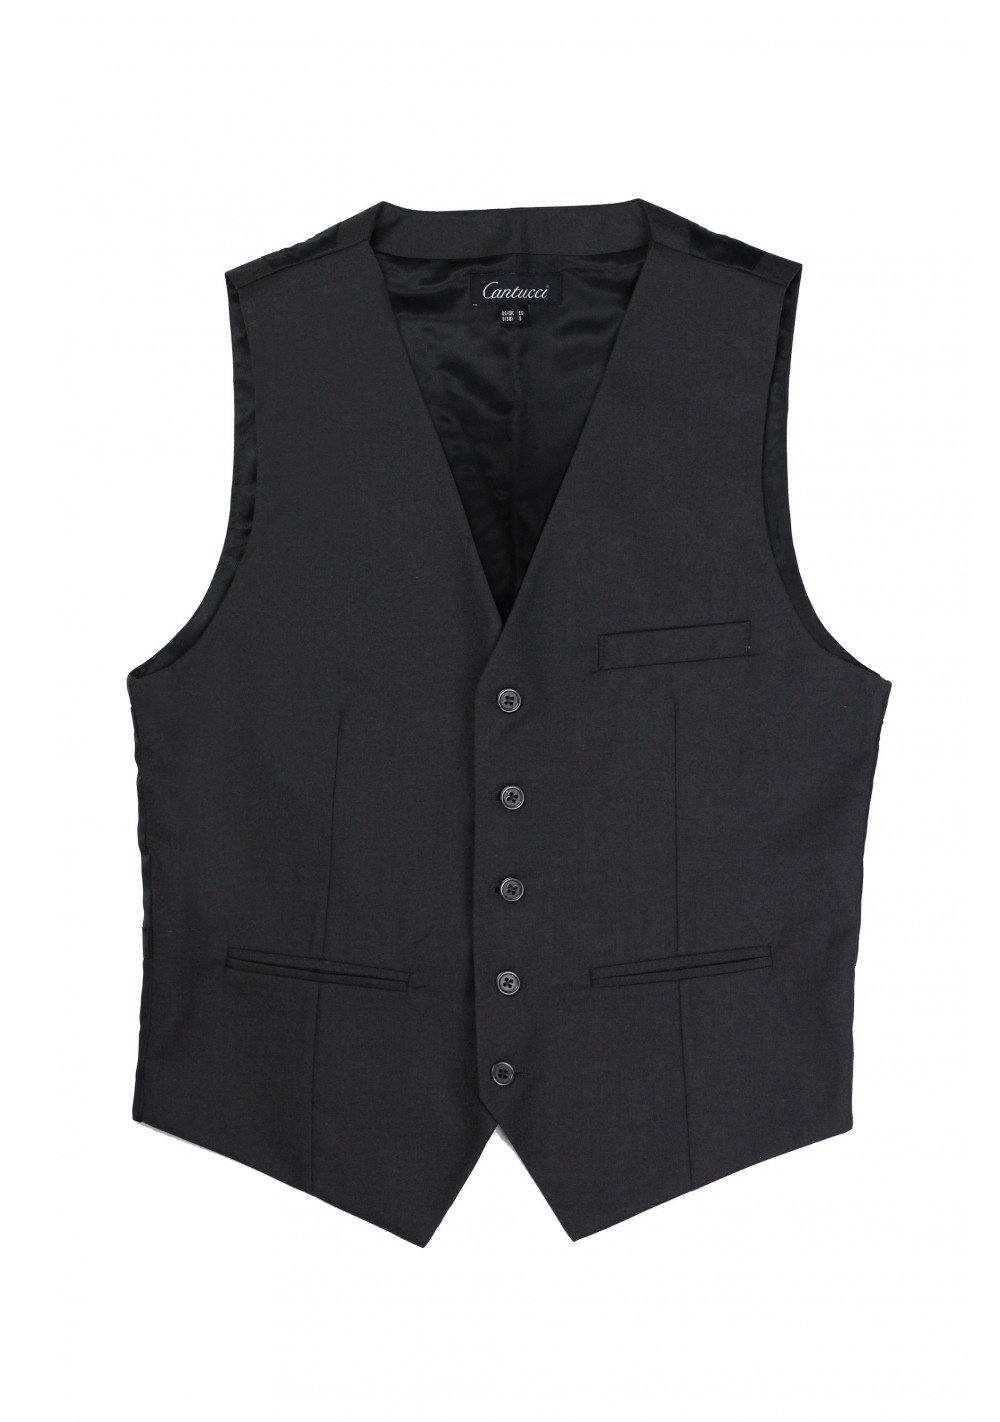 Mens Suit Vest in Charcoal | Cheap-Neckties.com